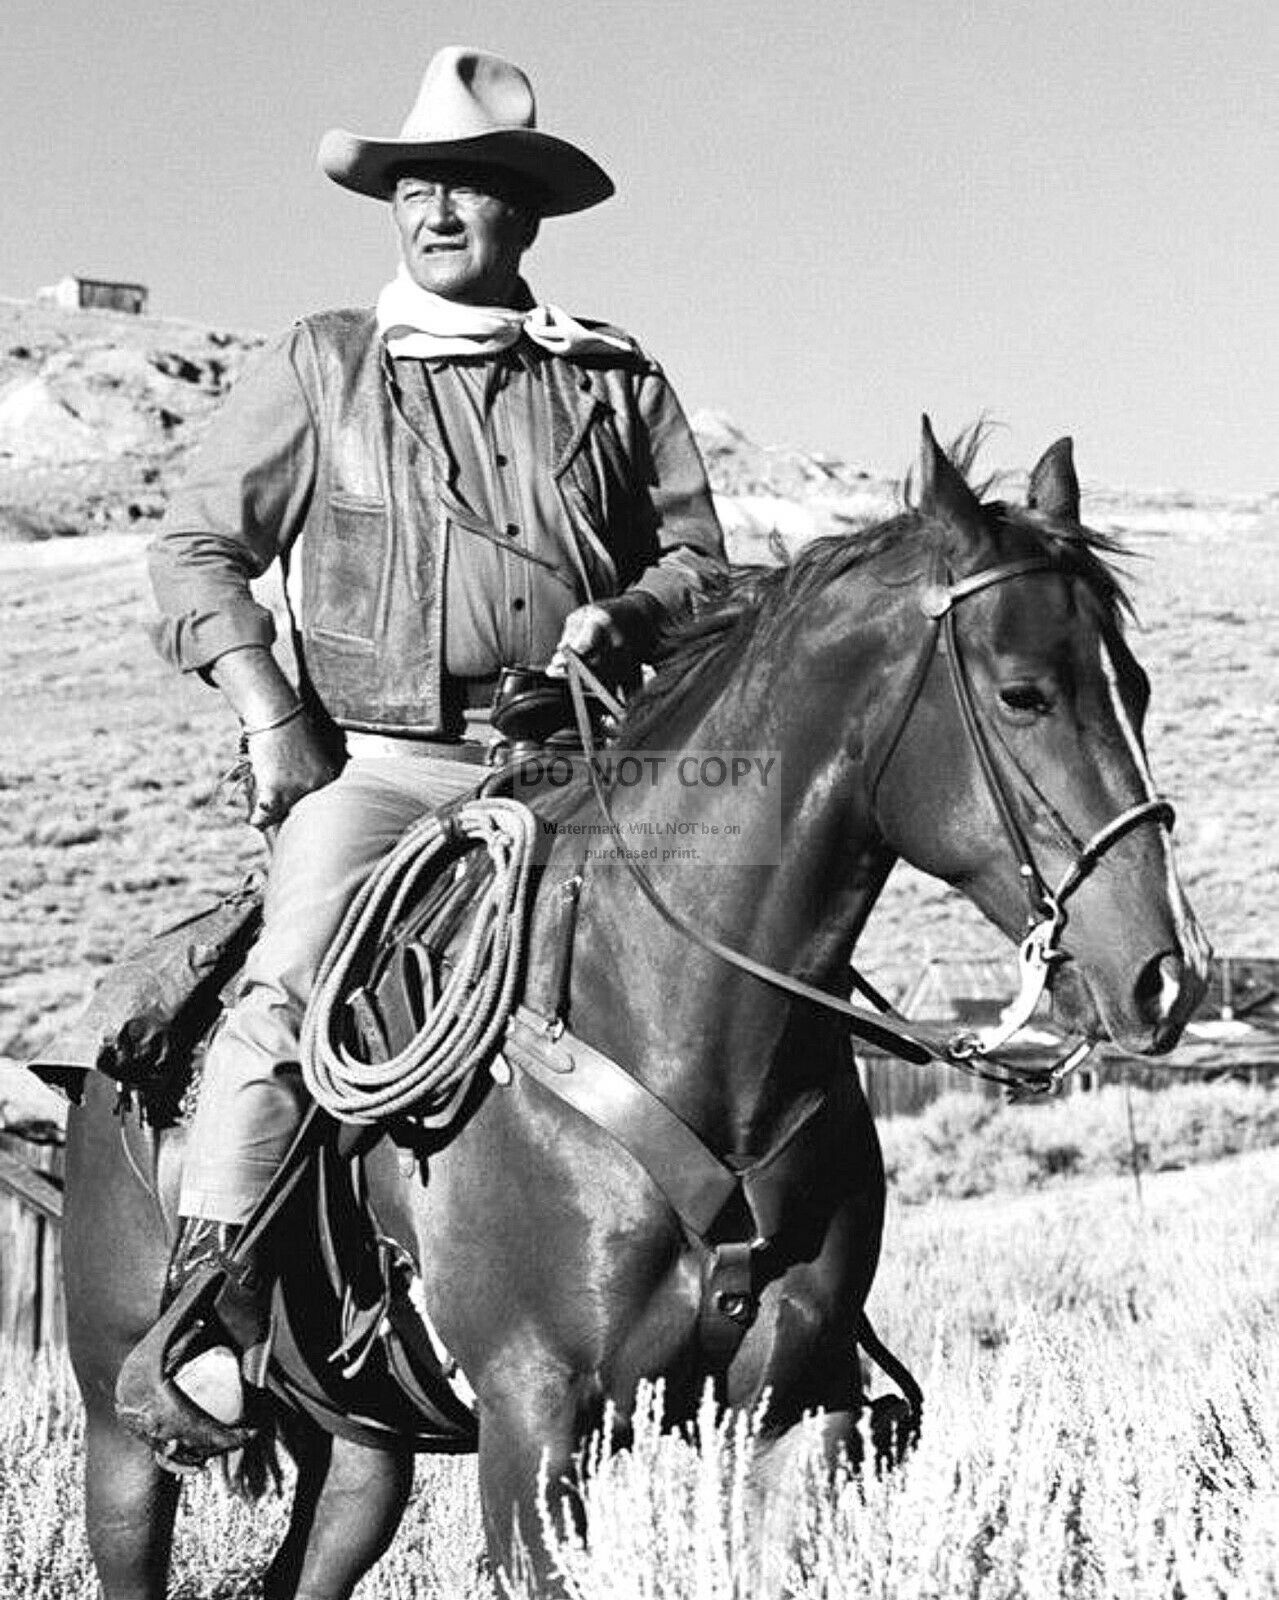 John Wayne Legendary Actor - 8x10 Publicity Photo (sp229)